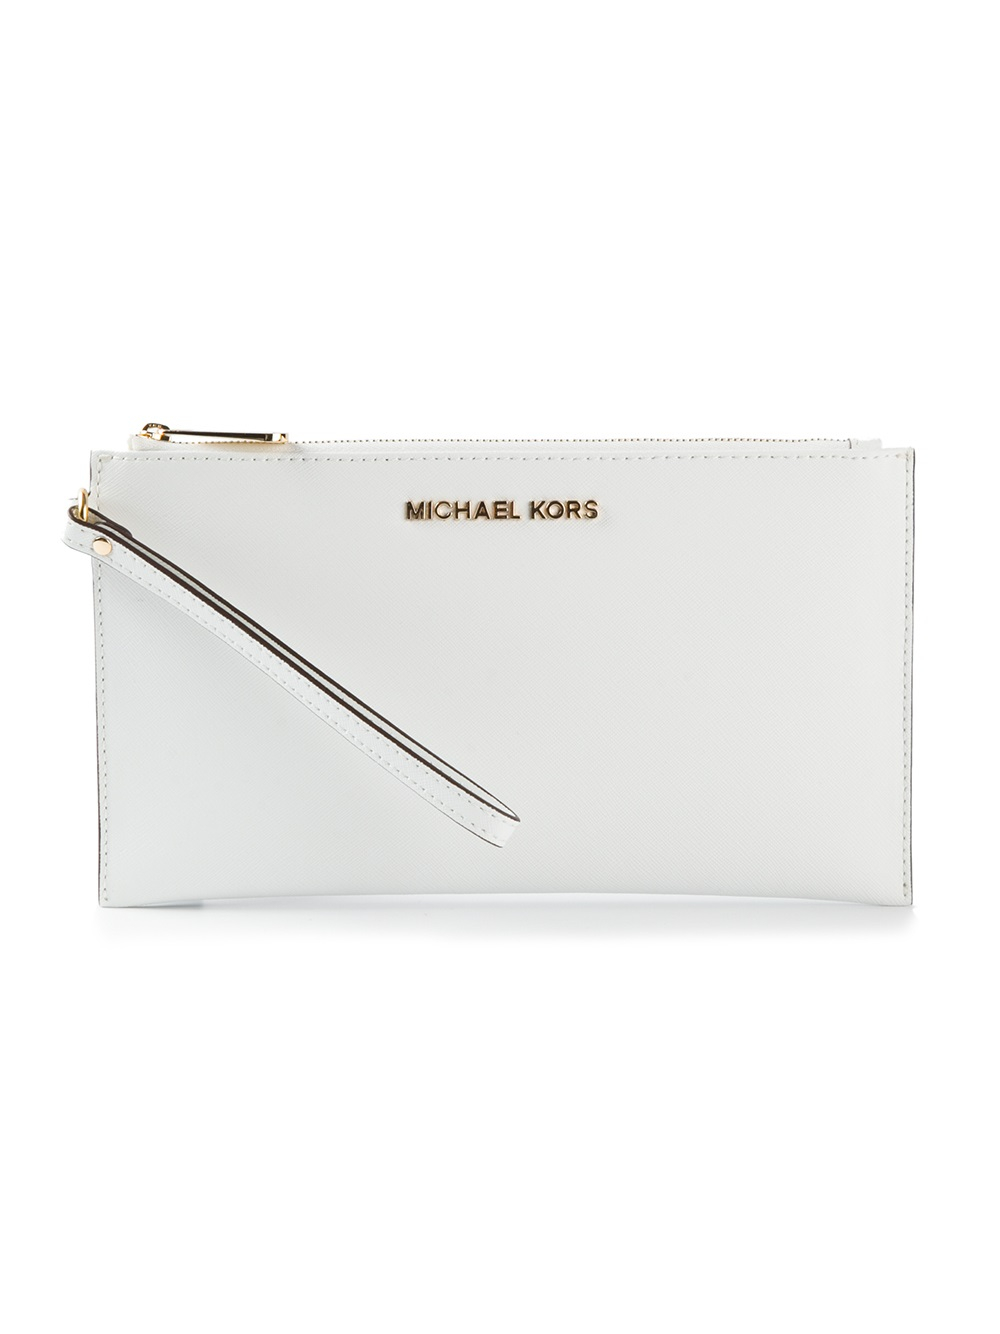 michael kors white clutch purse